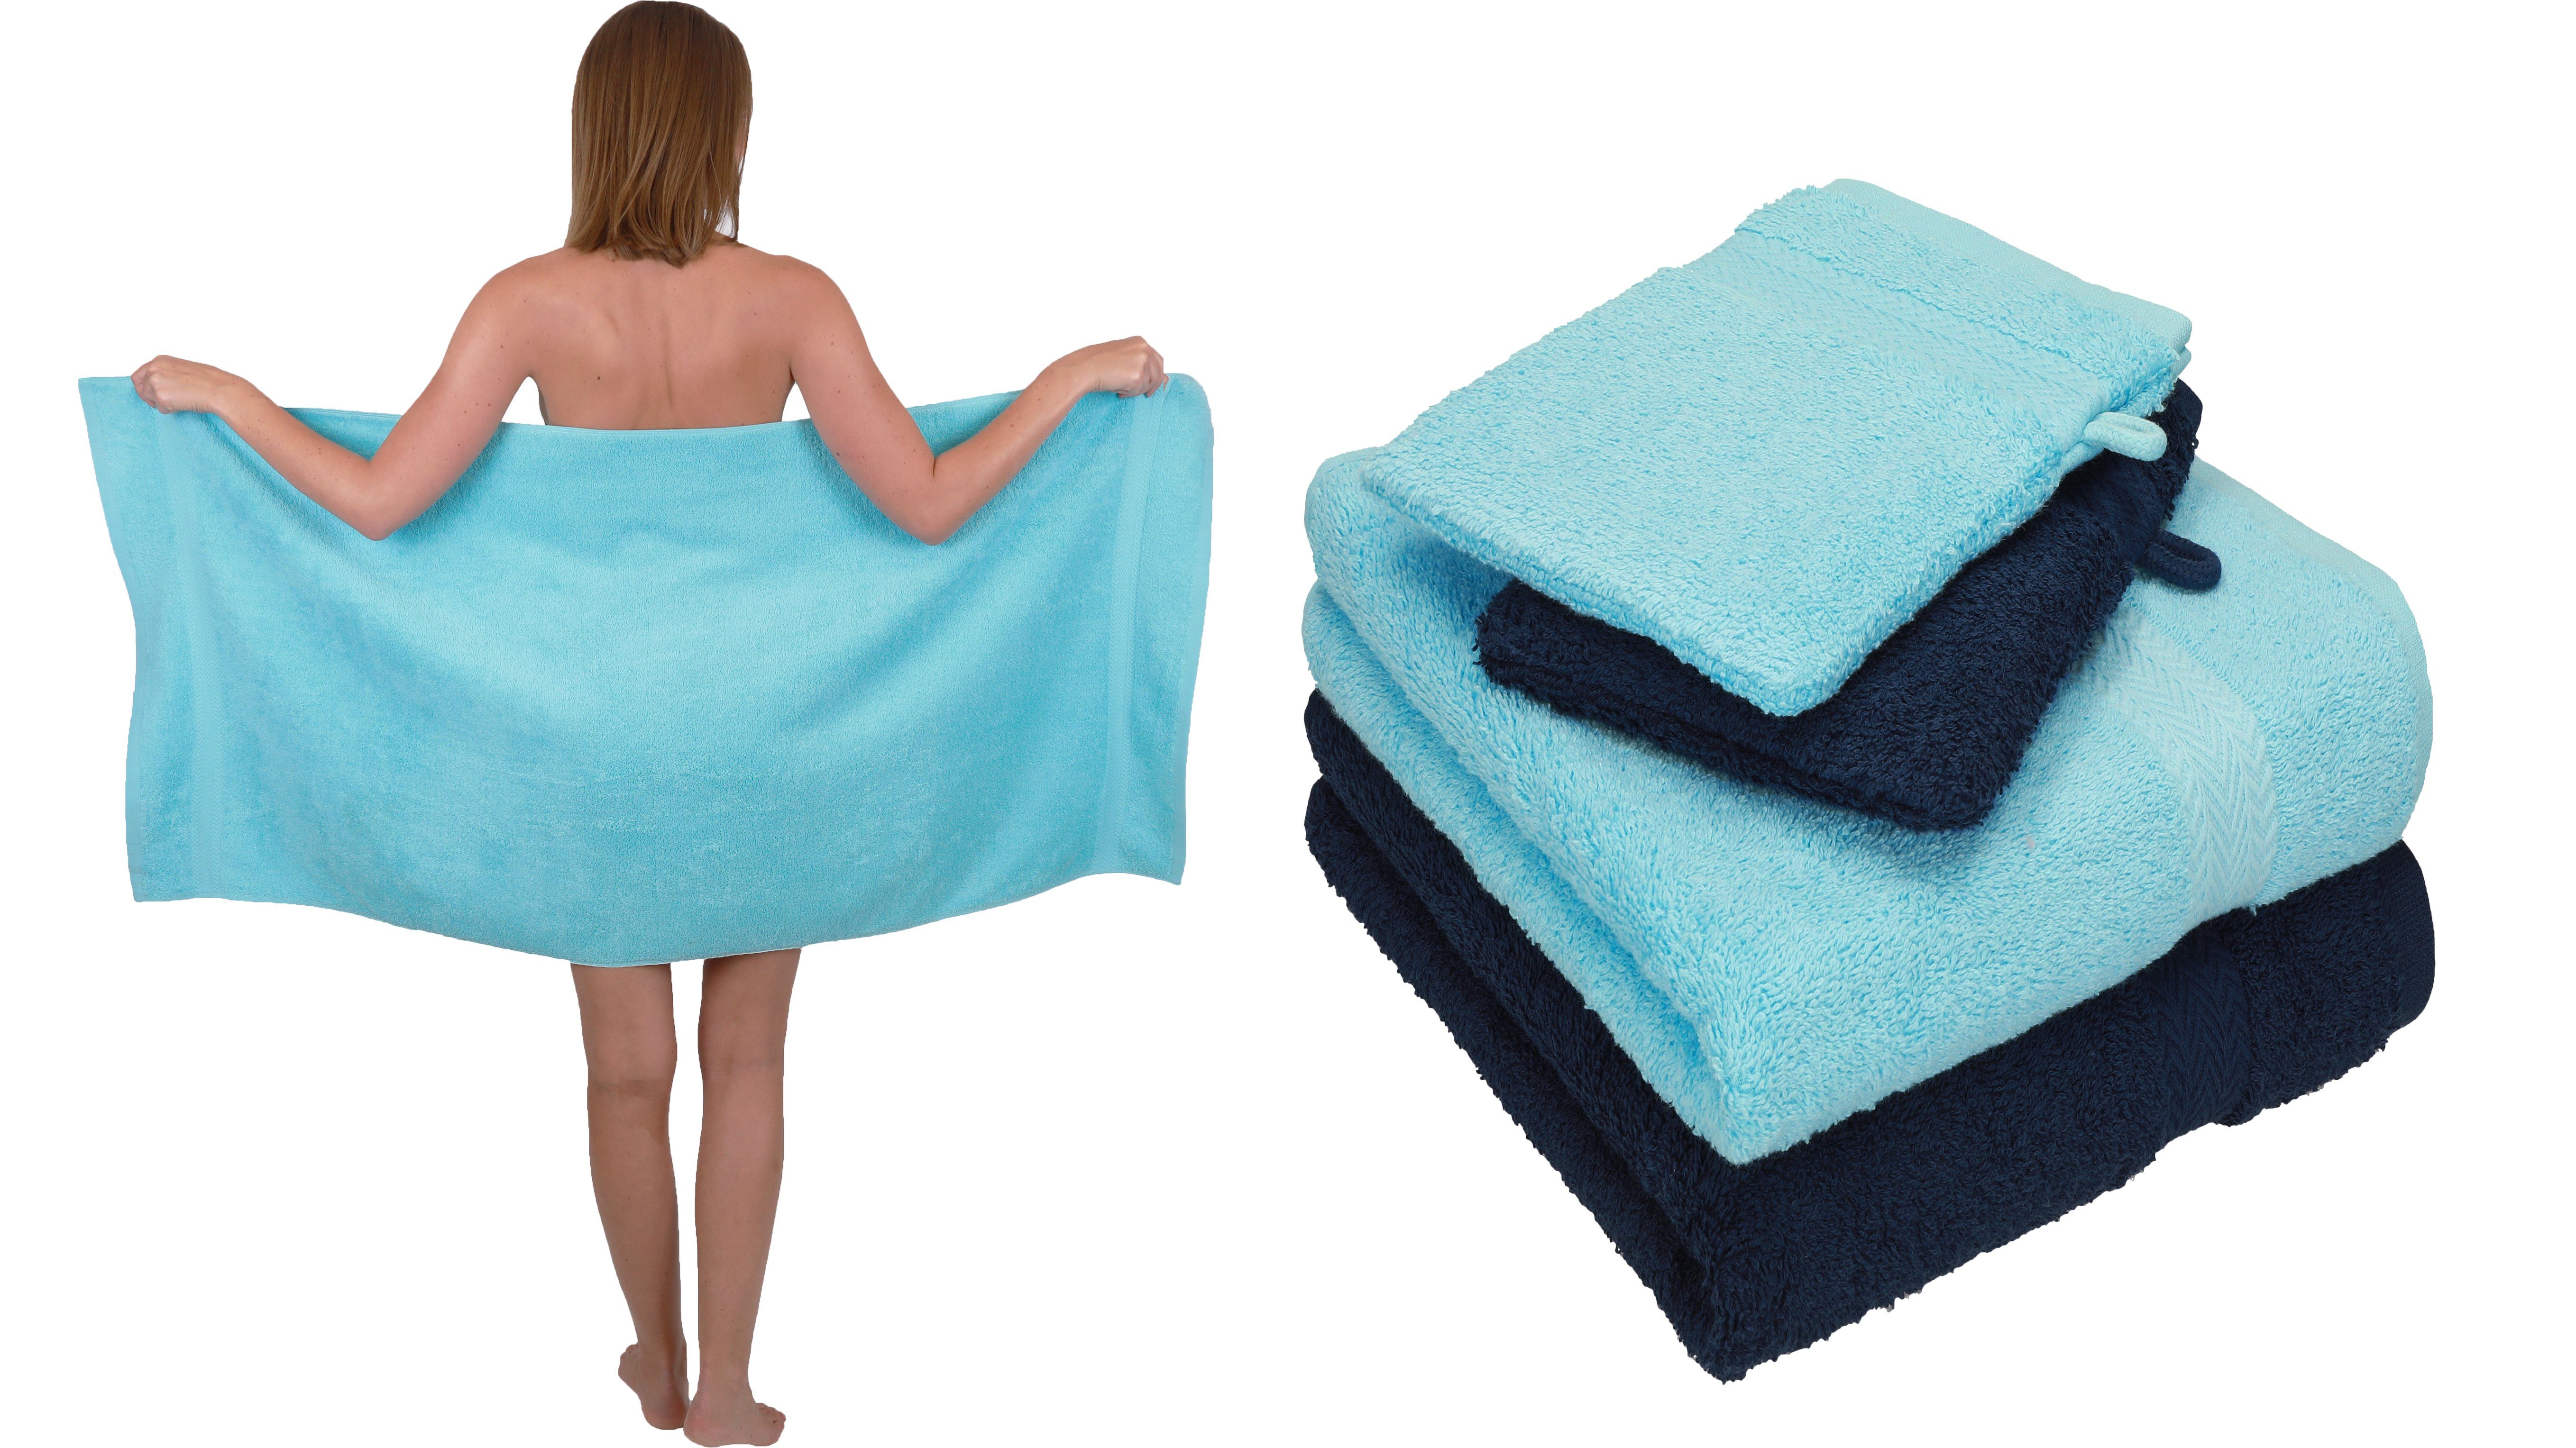 Betz Handtuch Set 5 TLG. Handtuch Set Single Pack 100% Baumwolle 1 Duschtuch 2 Handtücher 2 Waschhandschuhe, 100% Baumwolle türkis-dunkelblau